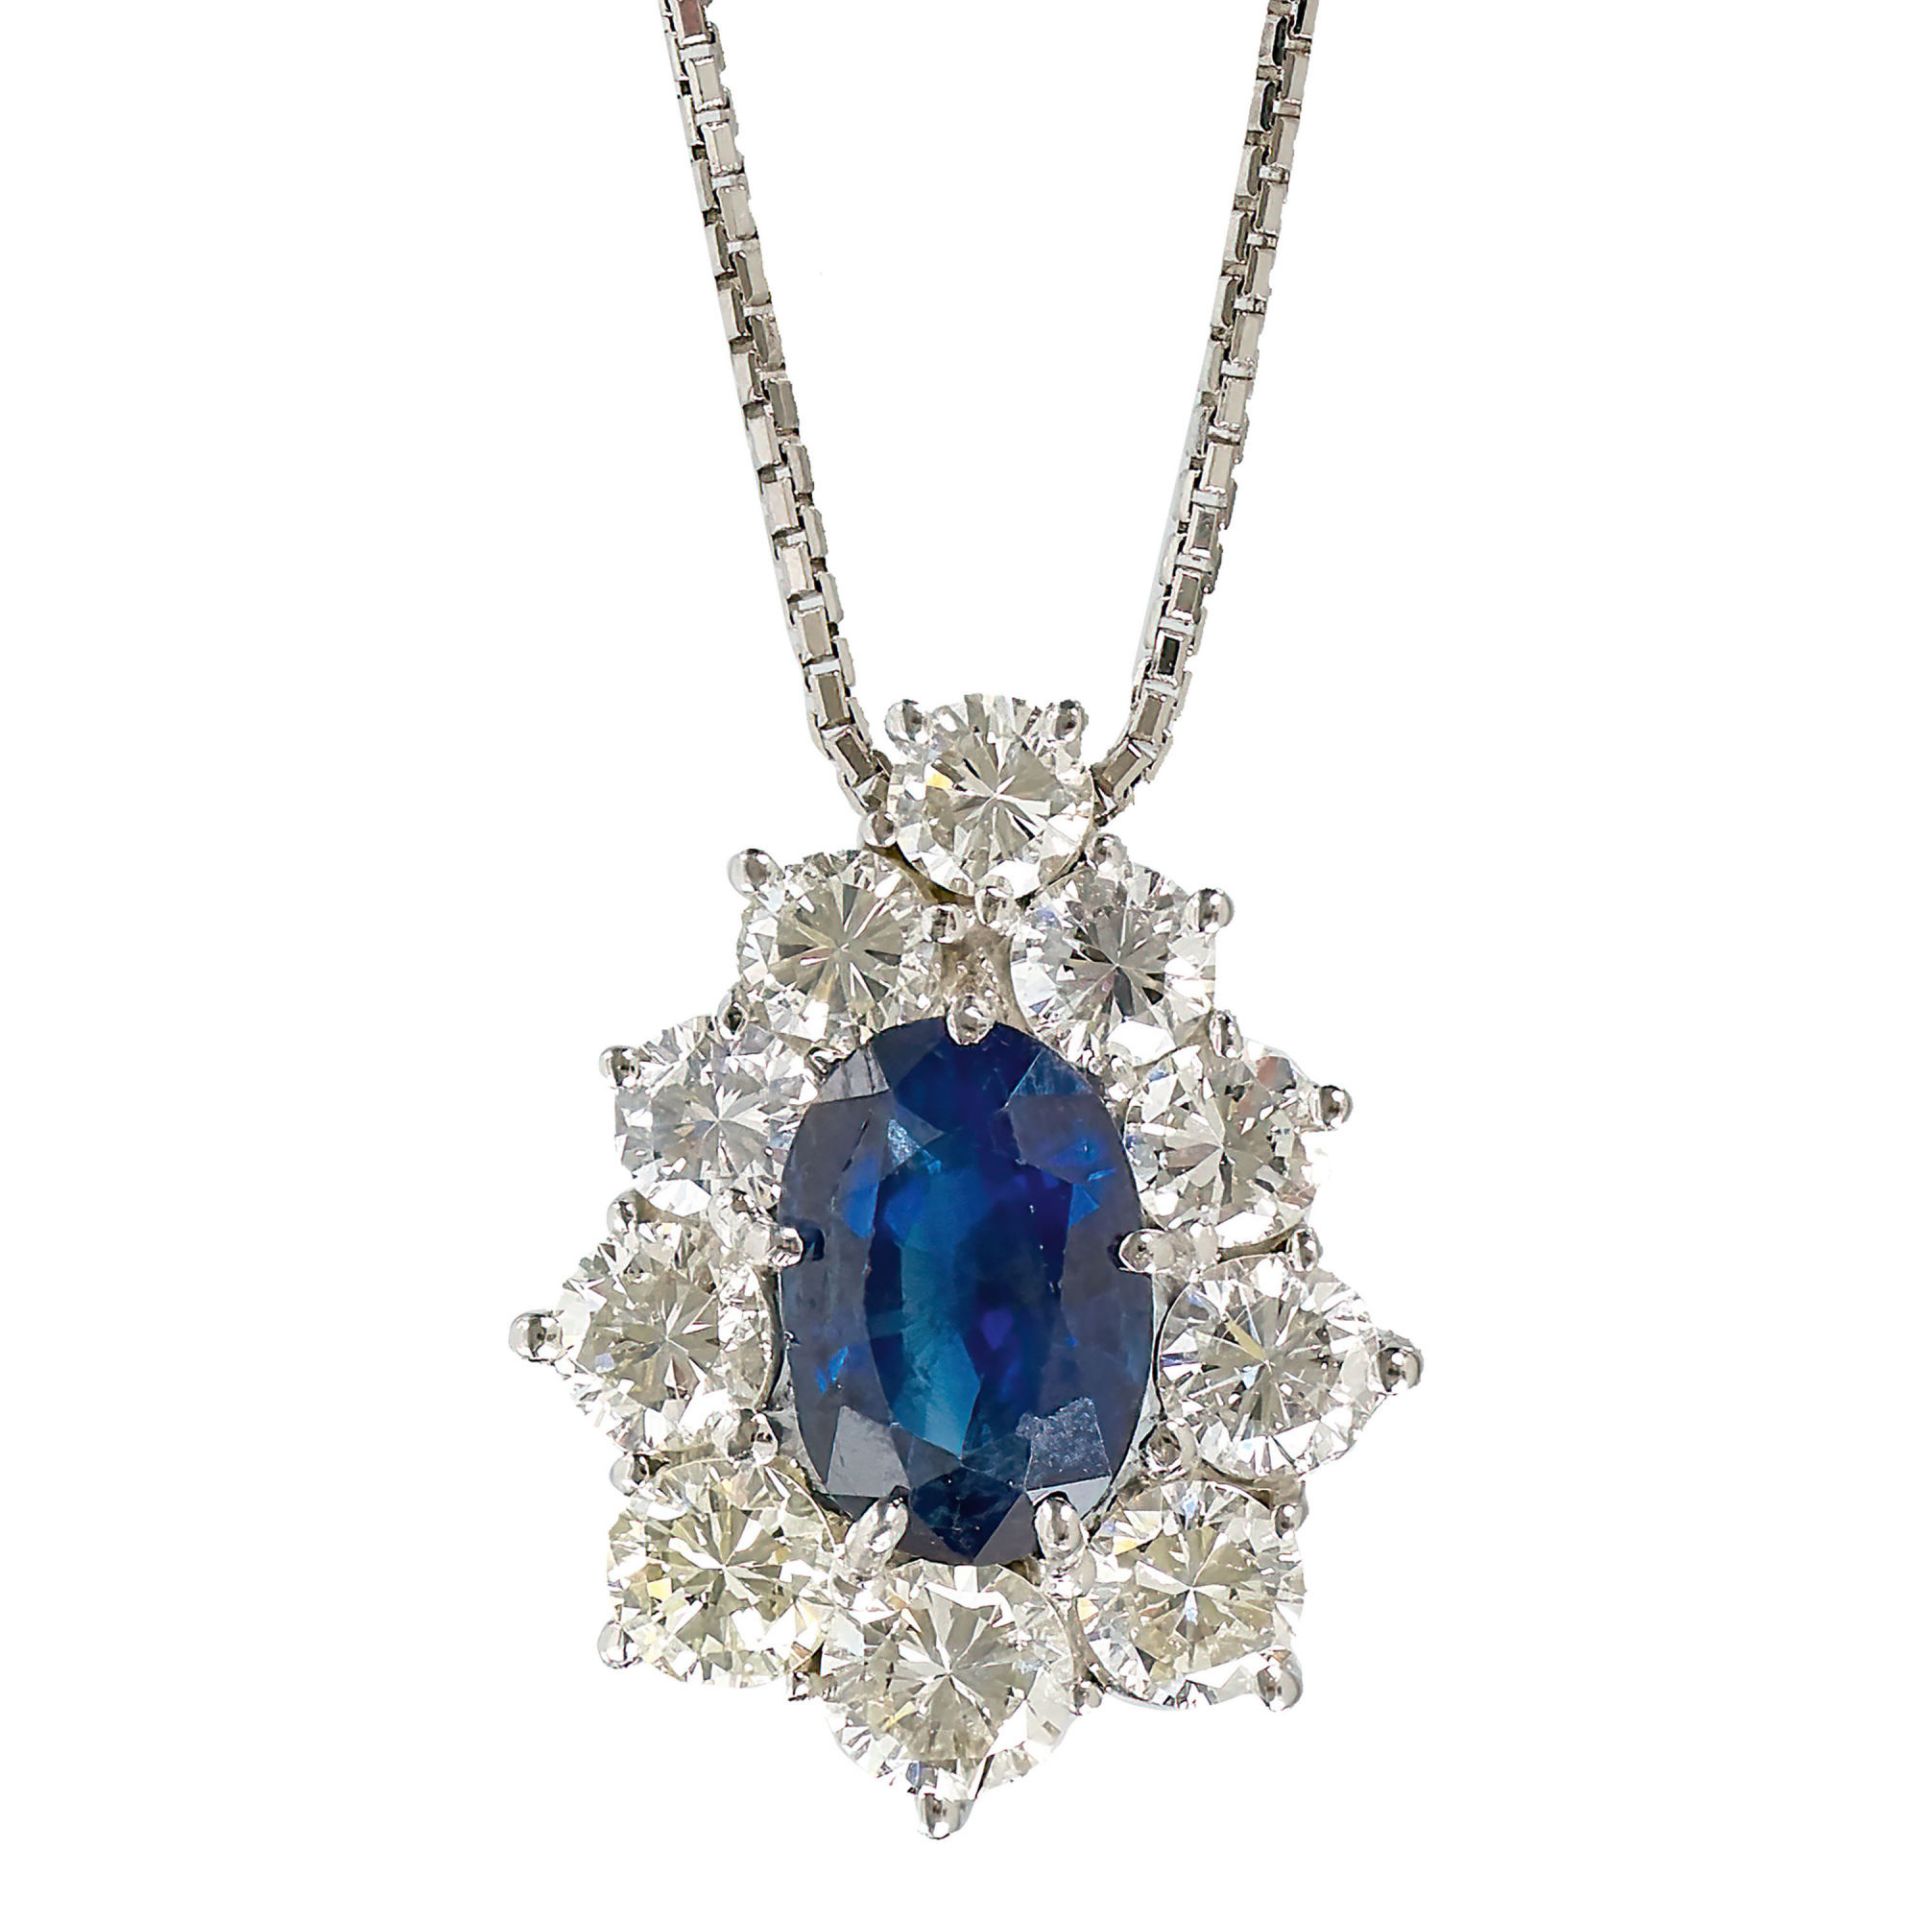 SAPHIR-BRILLANT-ANHÄNGER MIT KETTE / Sapphire-diamond-pendant necklace